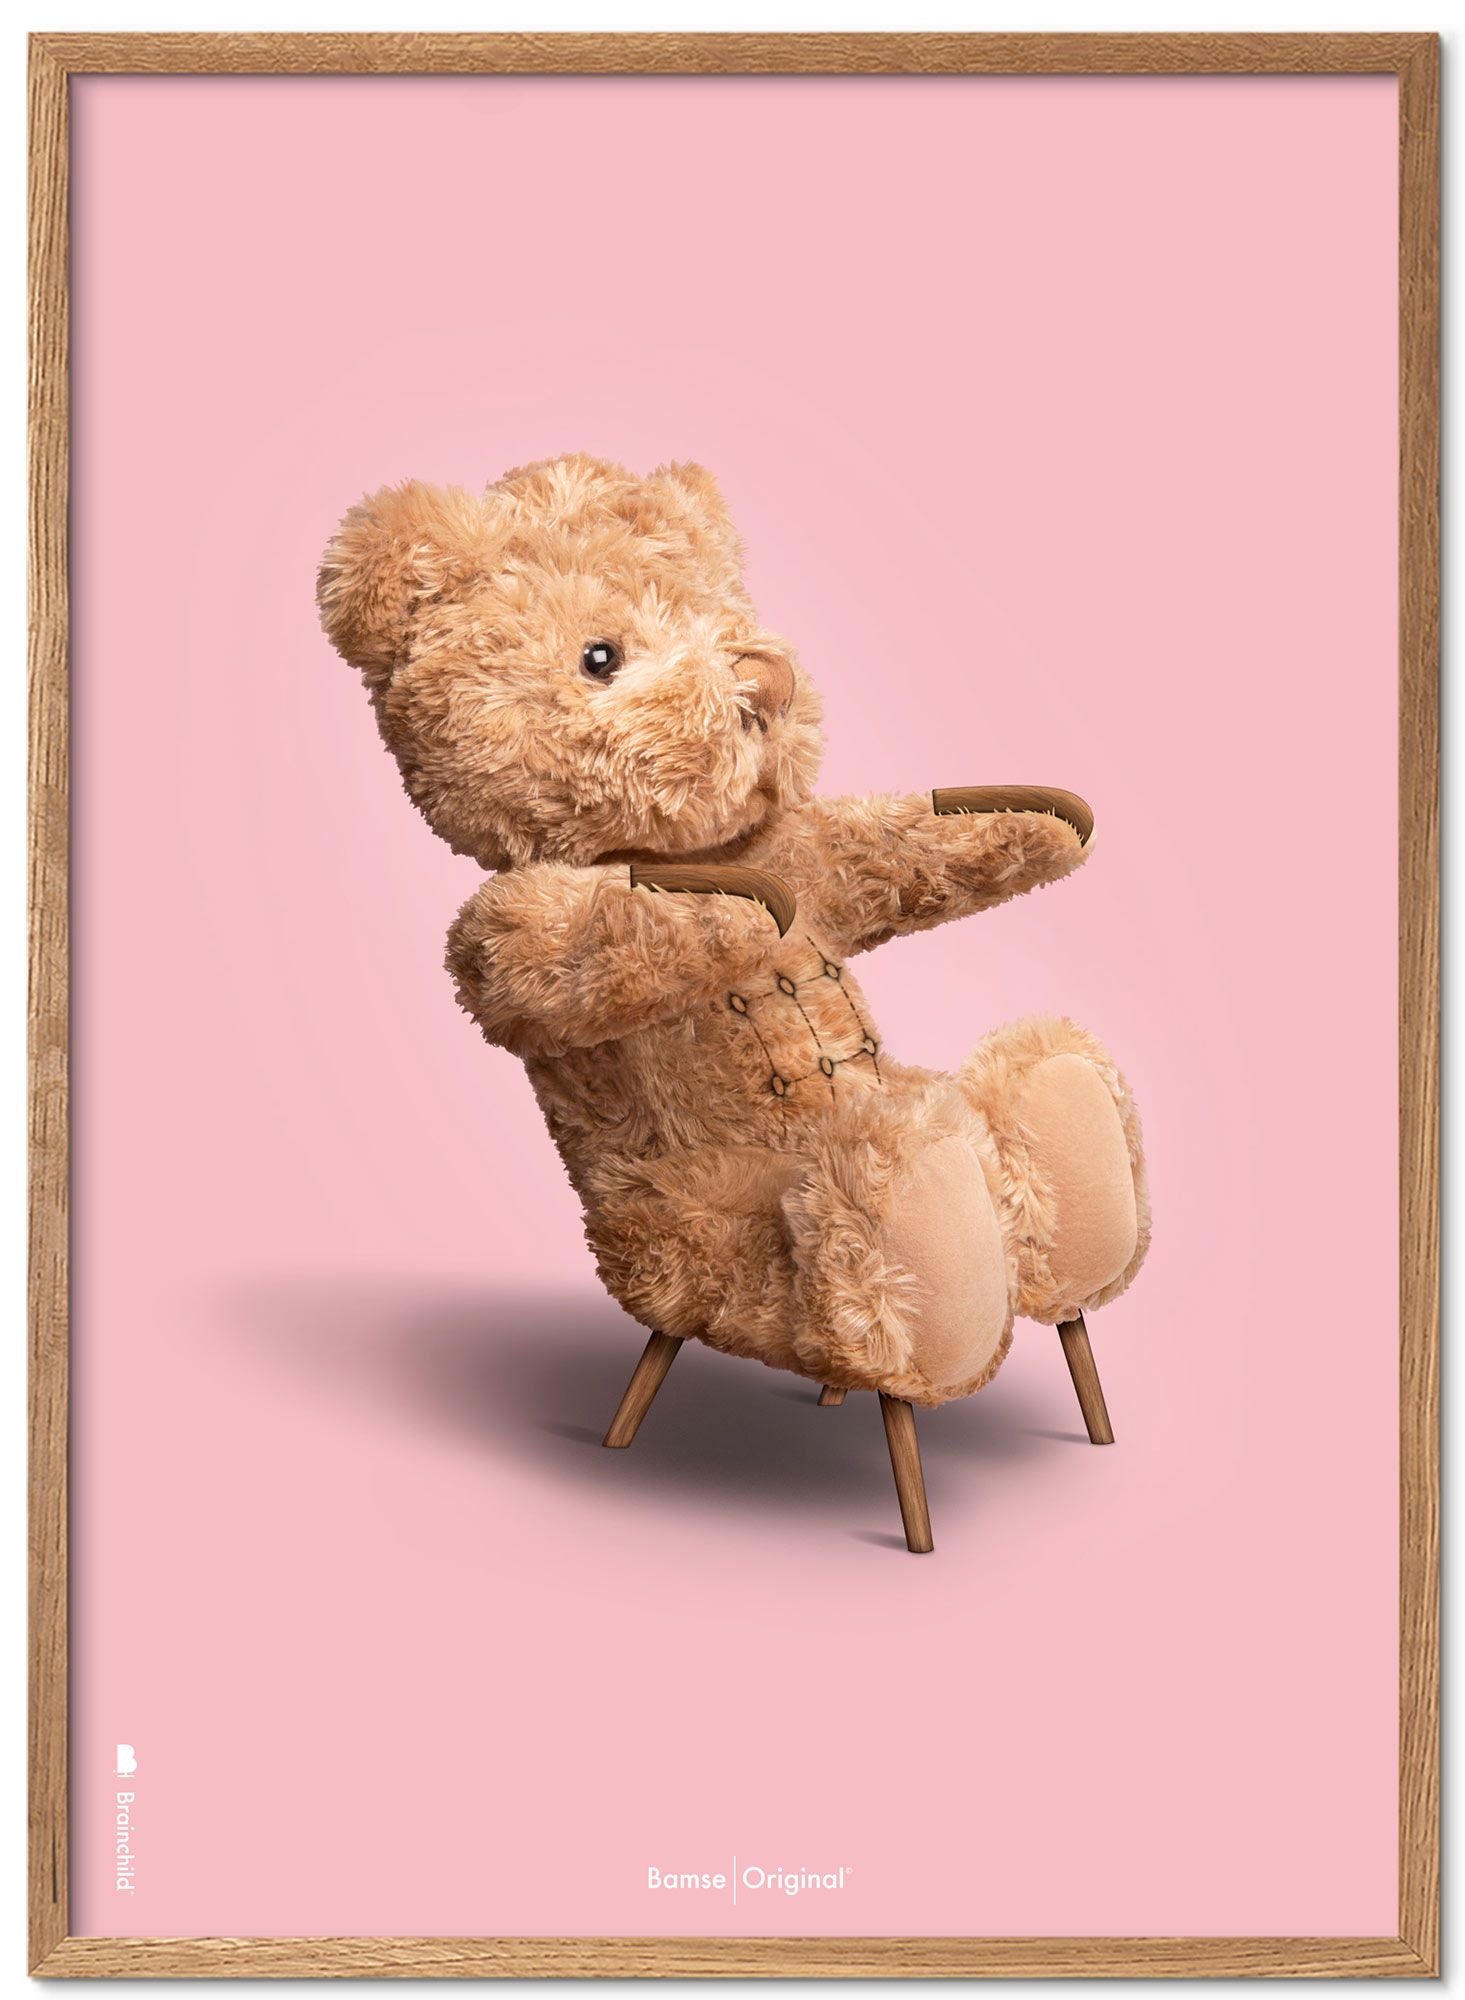 Brainchild Teddy Bear Classic Classic Light Wood Frame Ramme A5, fondo rosado